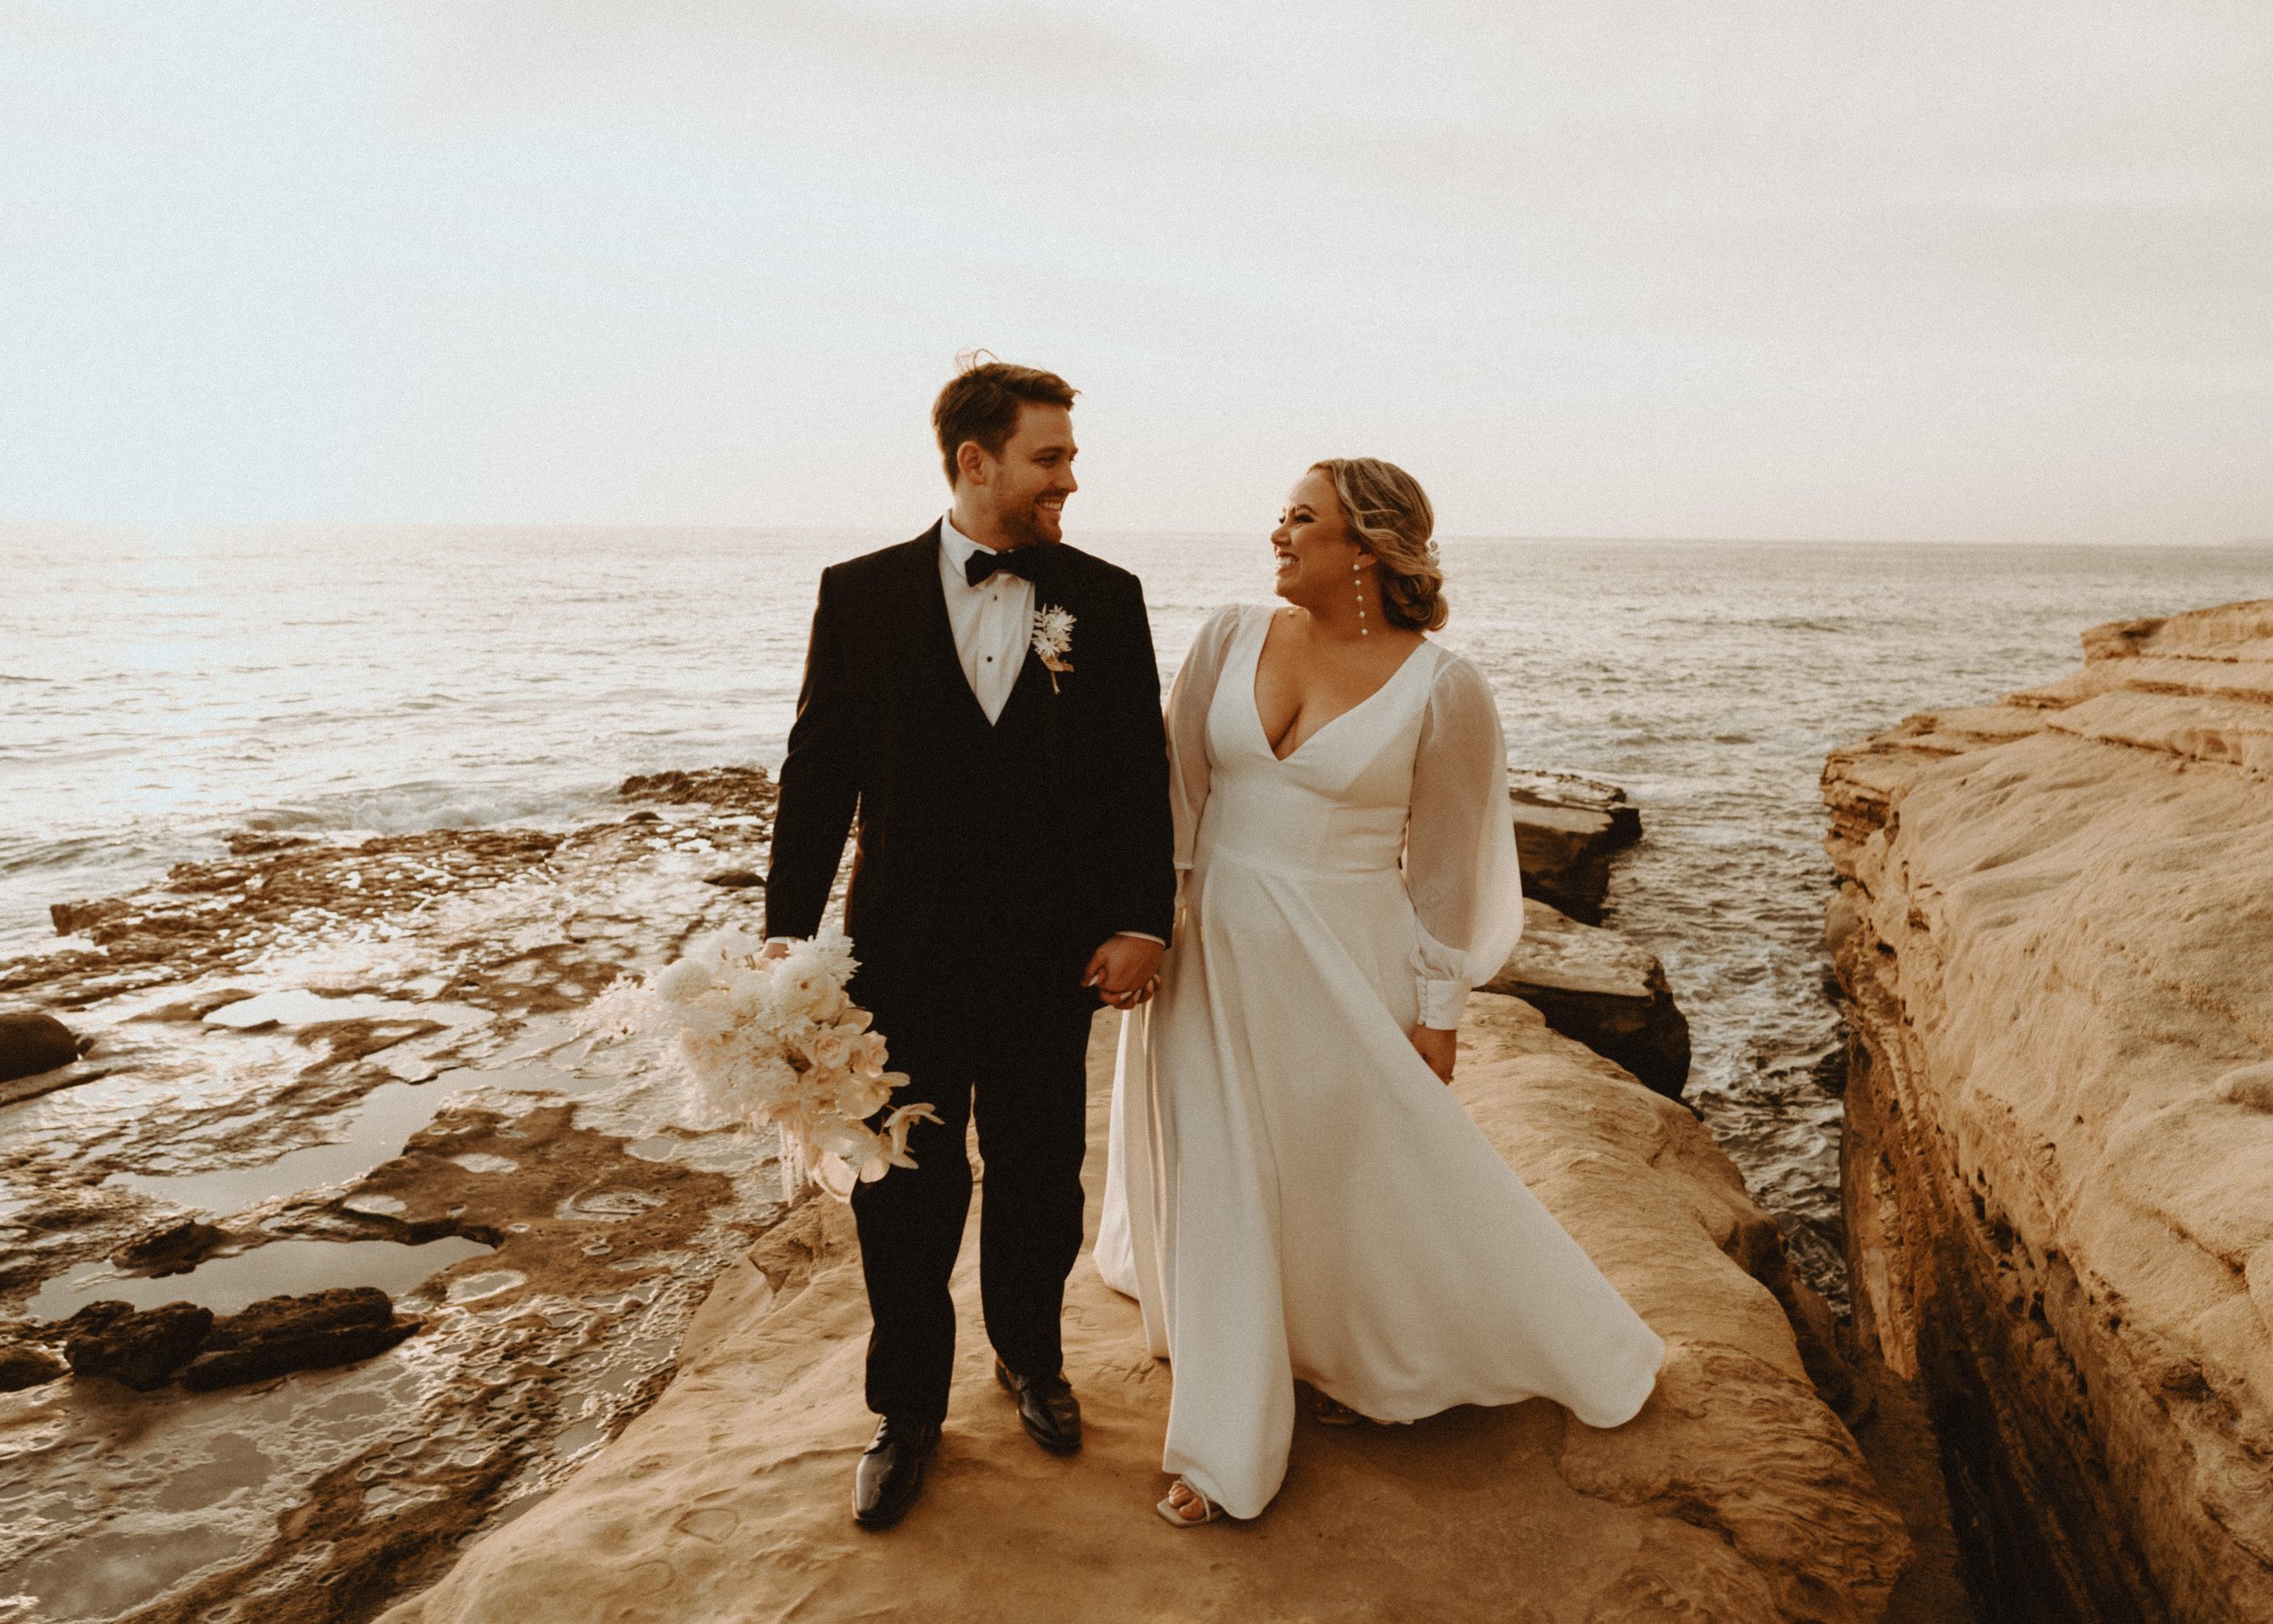 Intimate Coastal Destination Wedding | Destination Elopement Photographer | Italy Elopement | Positano Elopement | Italy wedding 